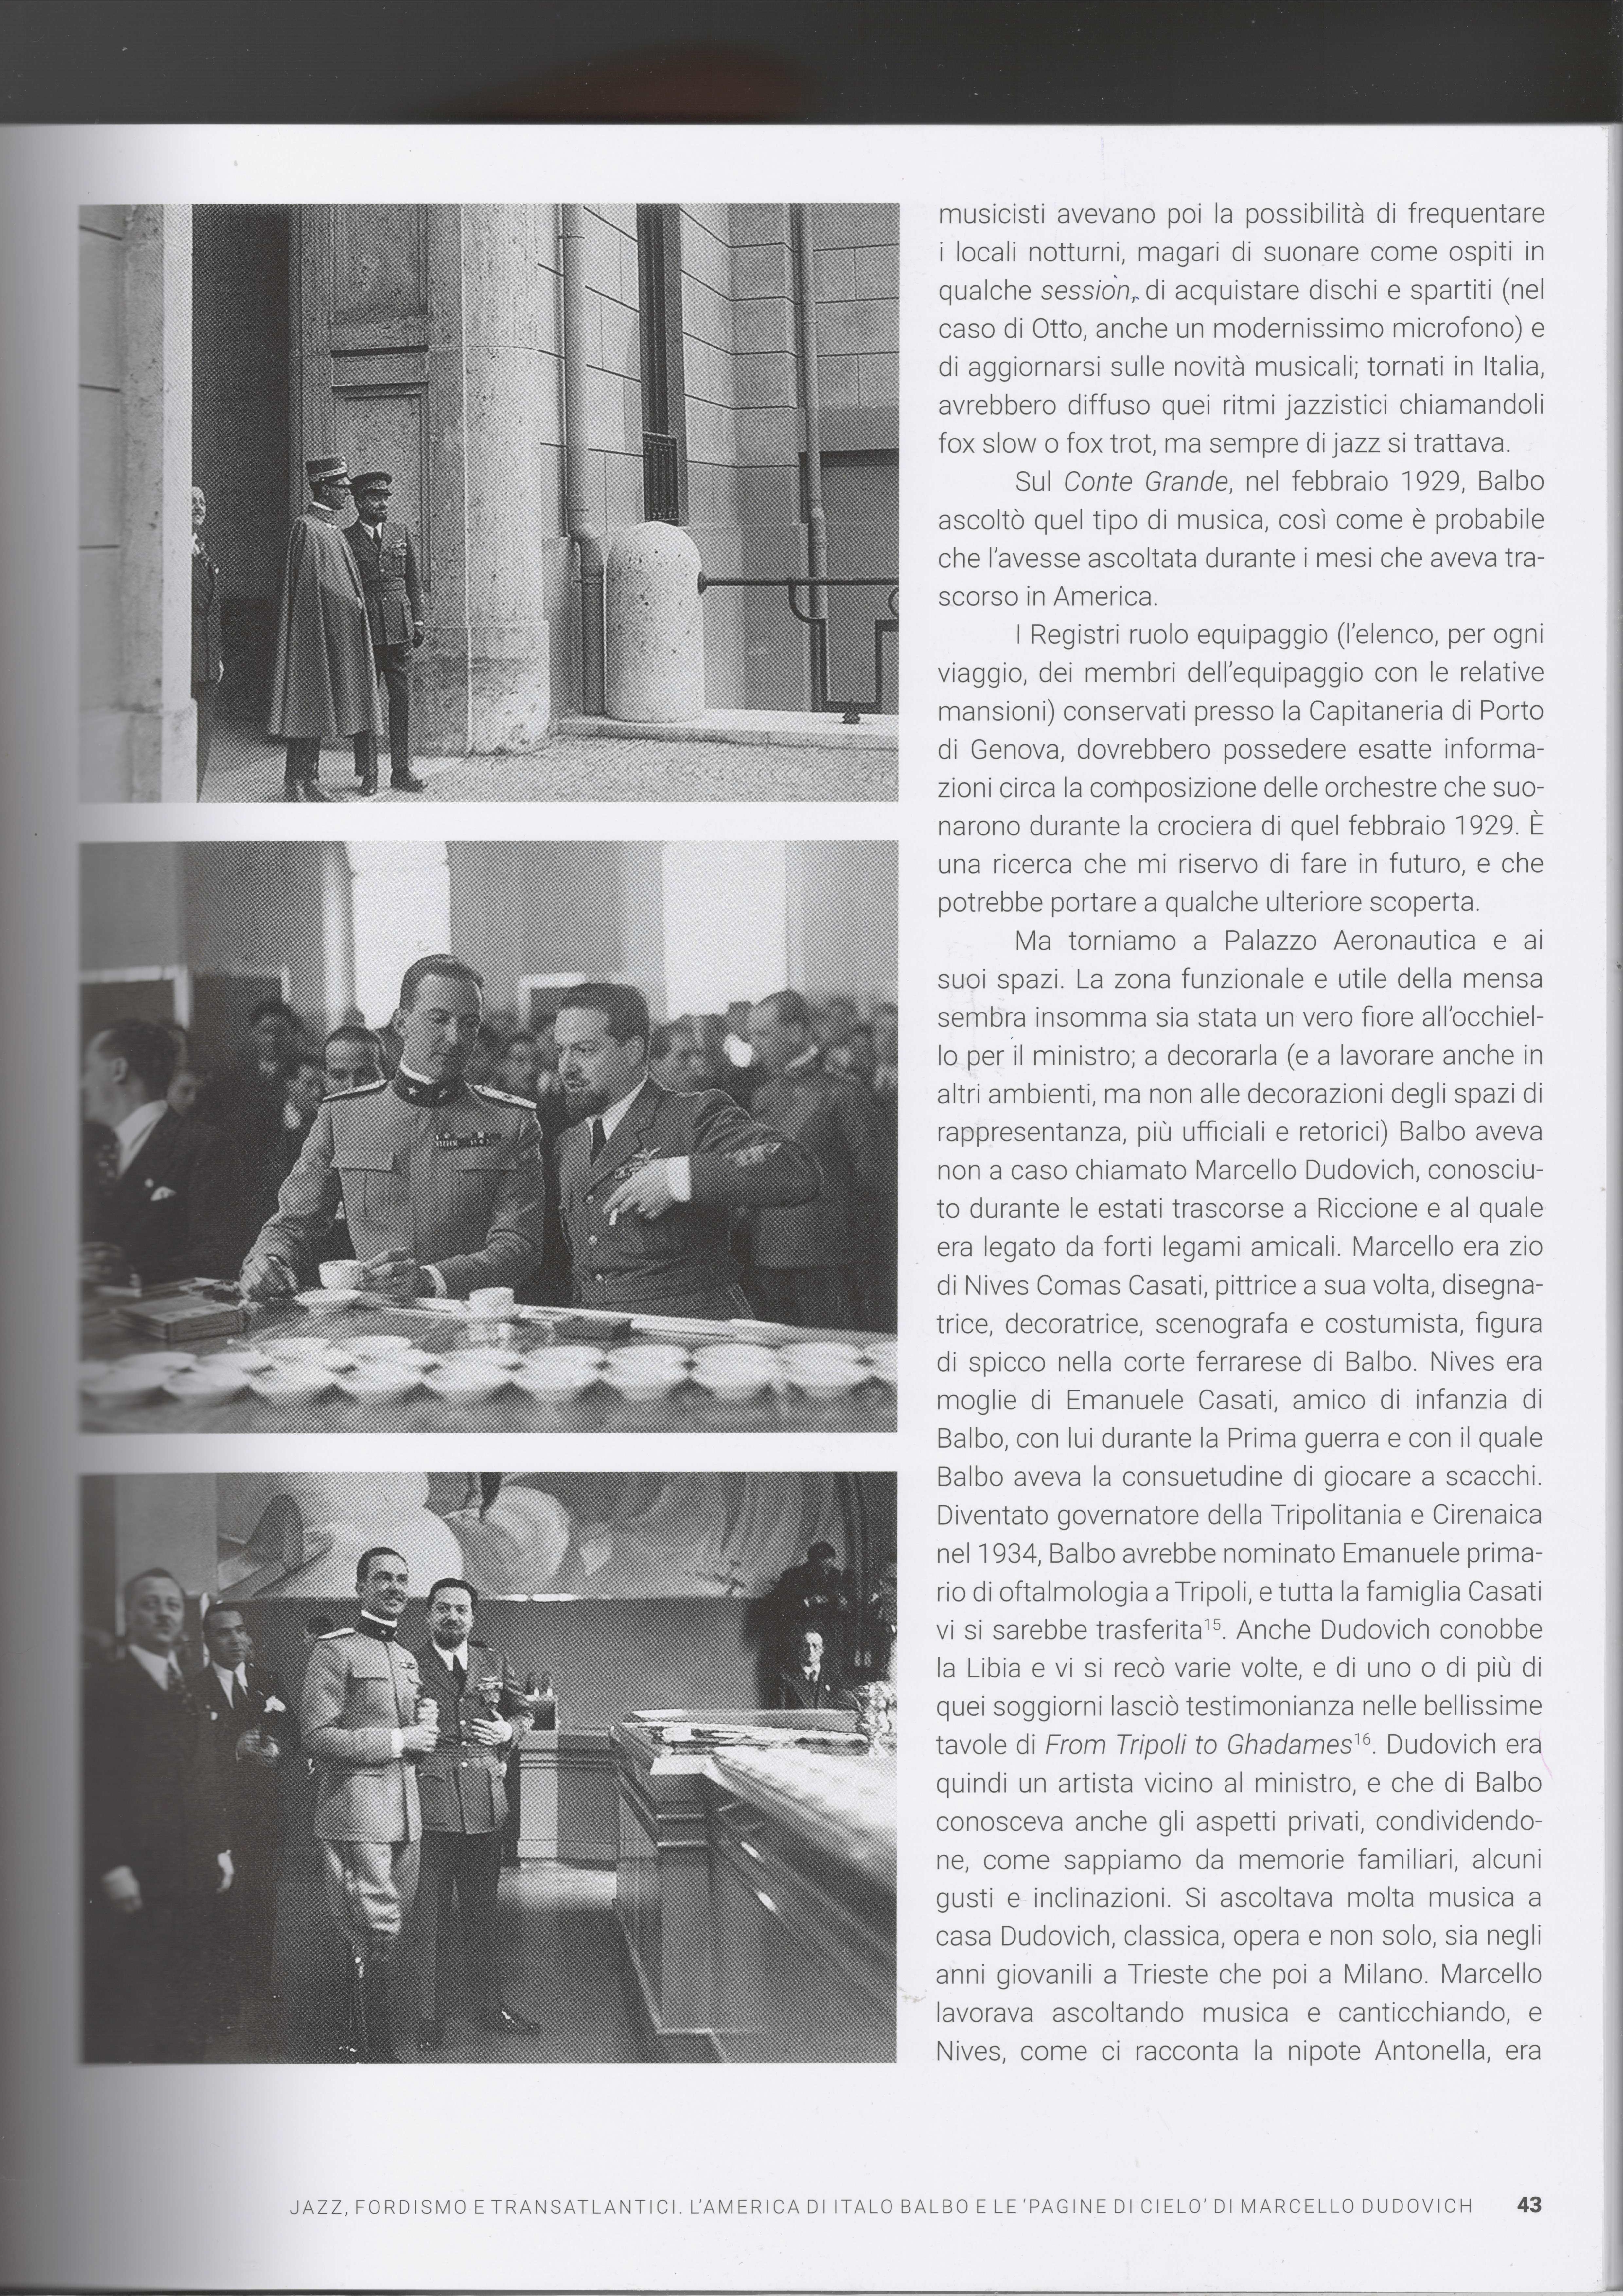 Fig 14 Lallora Principe Umberto in visita a Palazzo AeronauticaJPEG